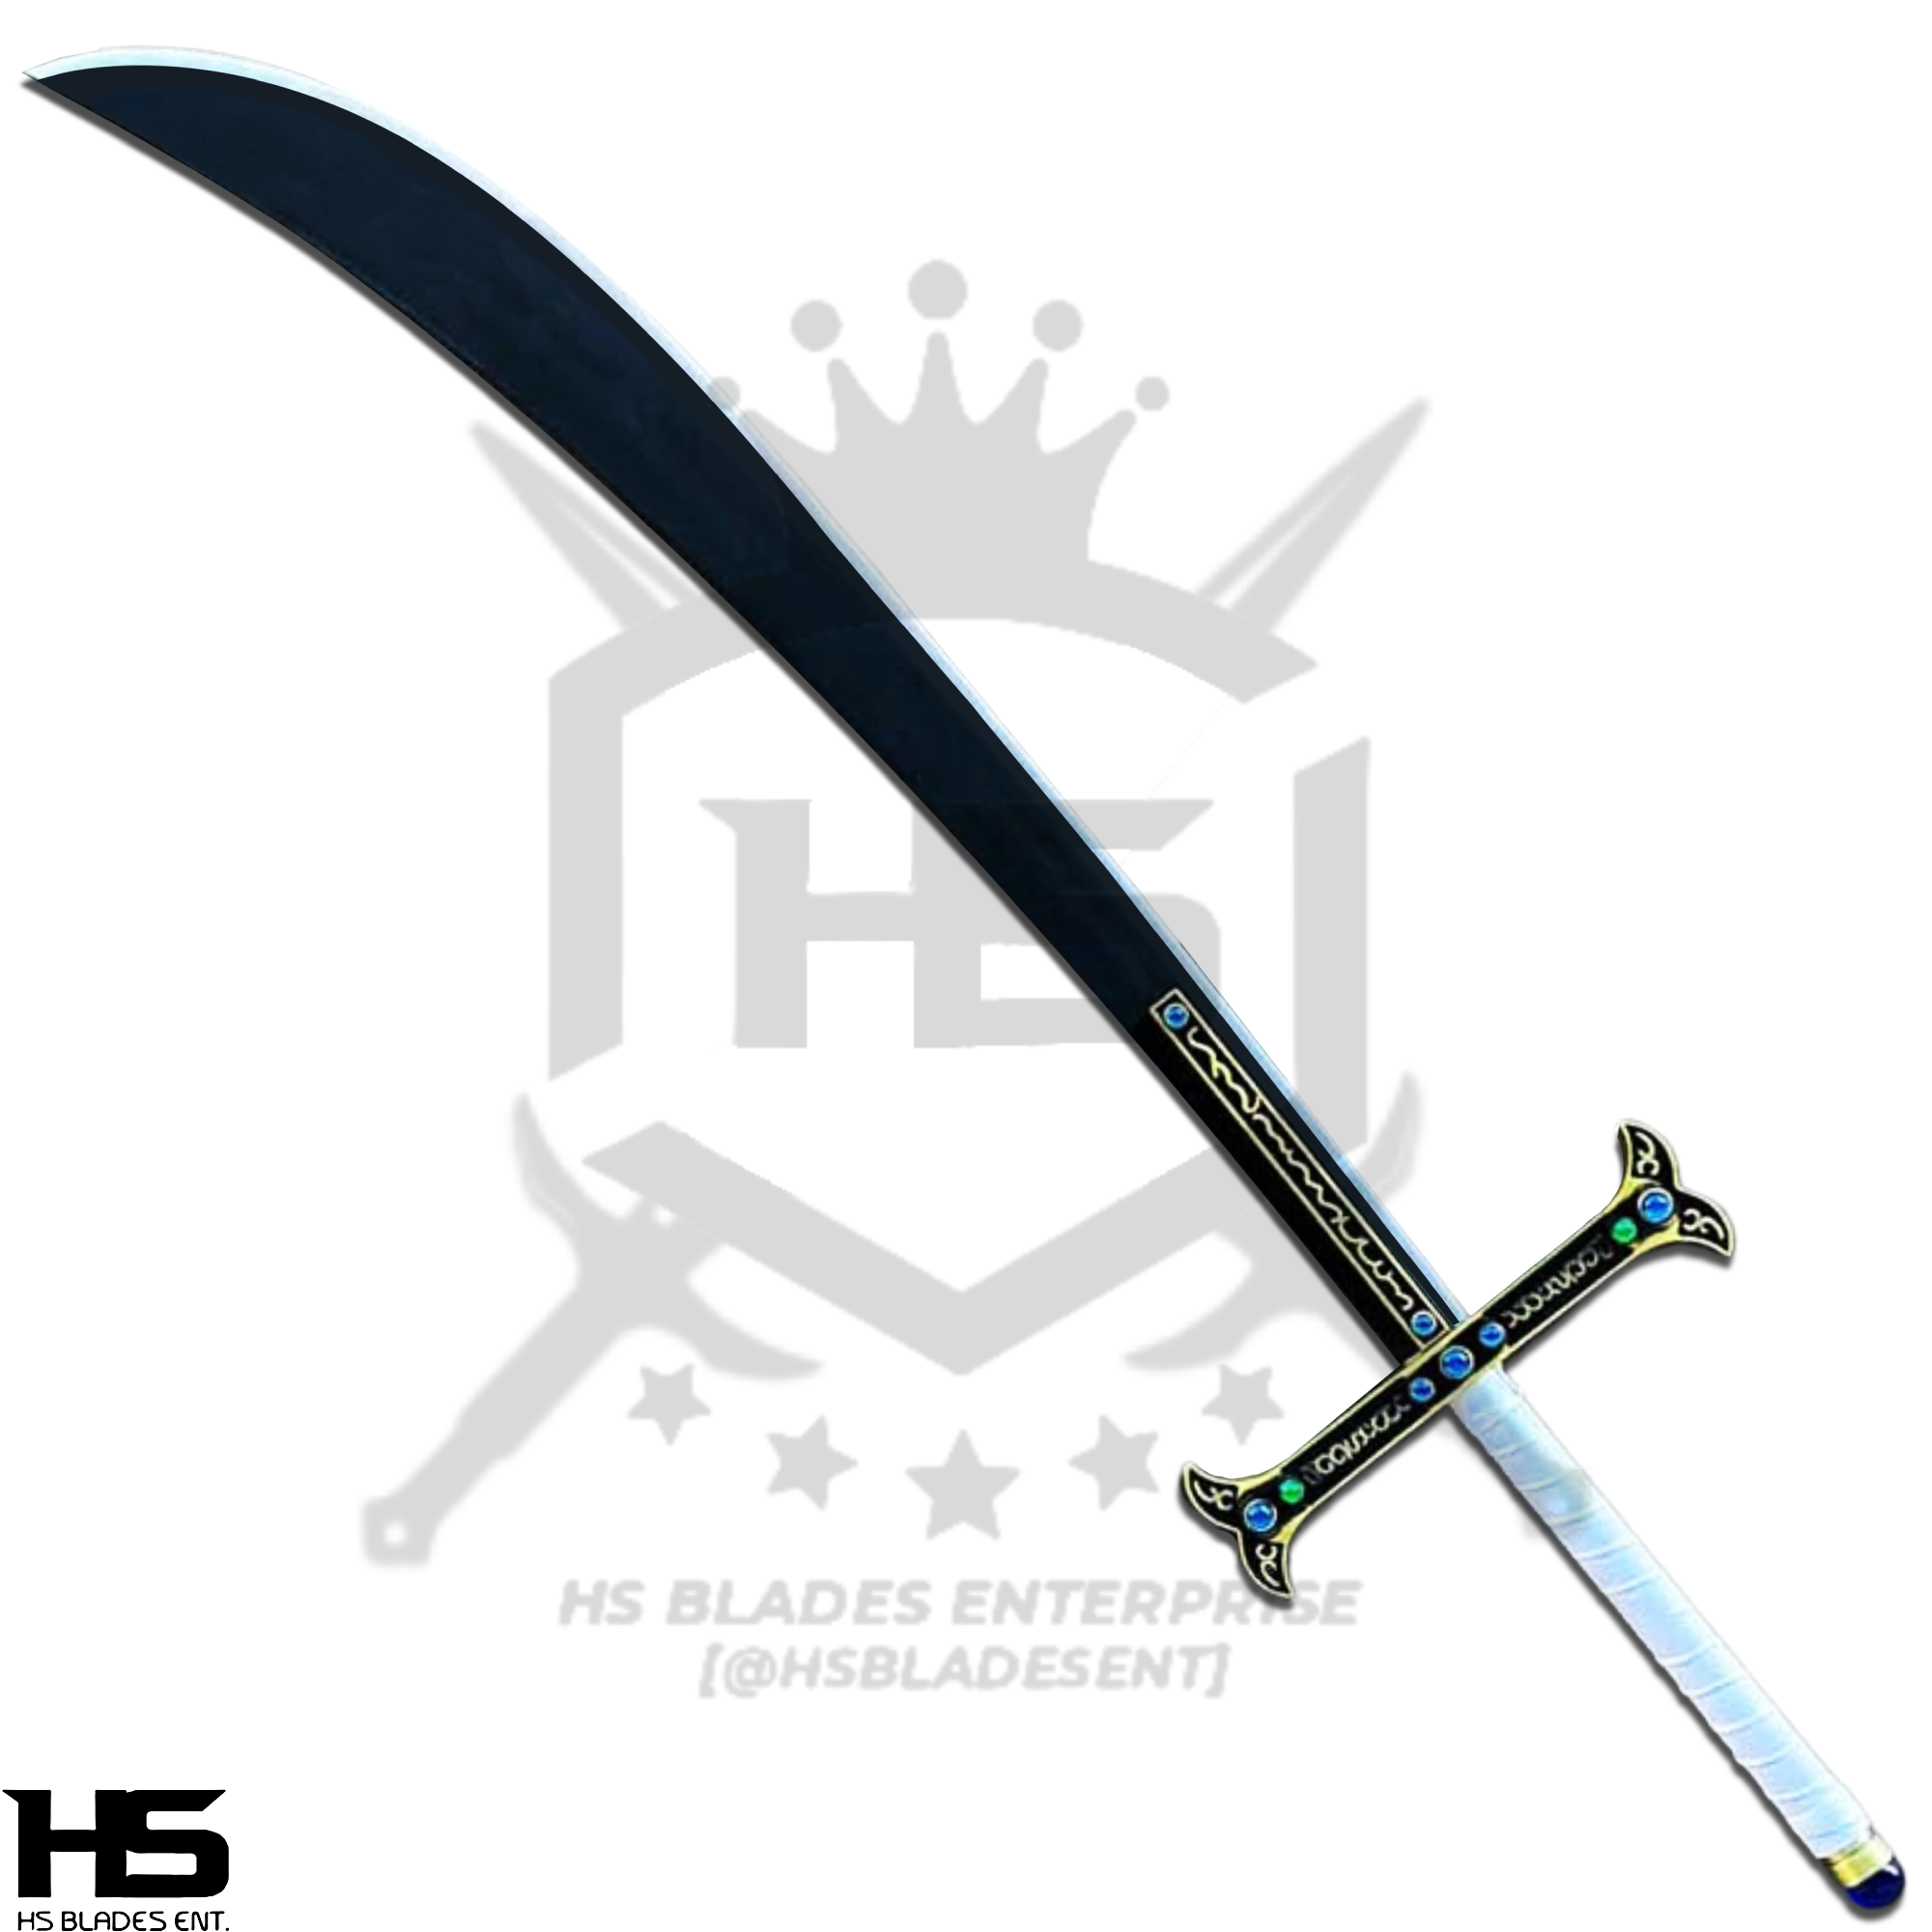 46.85-Inch Dracule Mihawk's Yoru Cosplay Sword